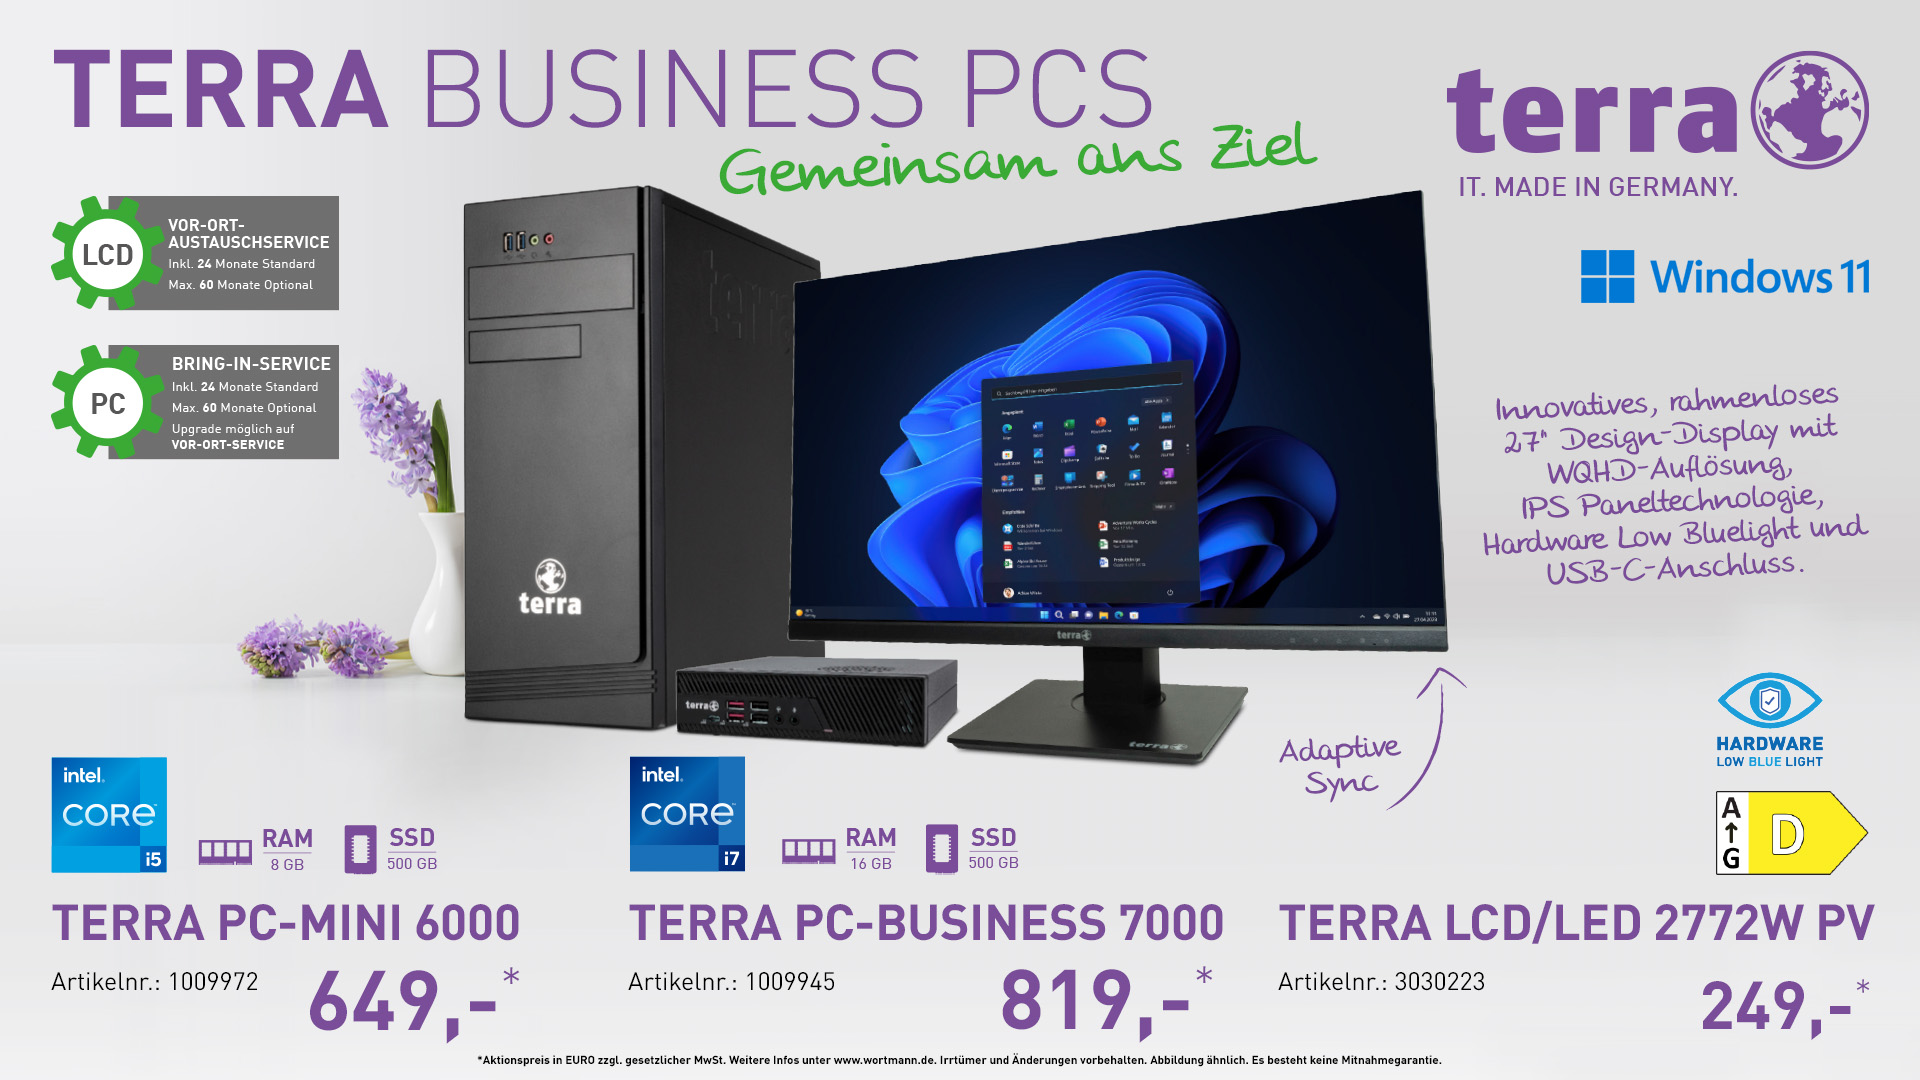 Terra PC-Mini 6000, Terra PC-Business 7000, Terra LCD/LED 2772W PV